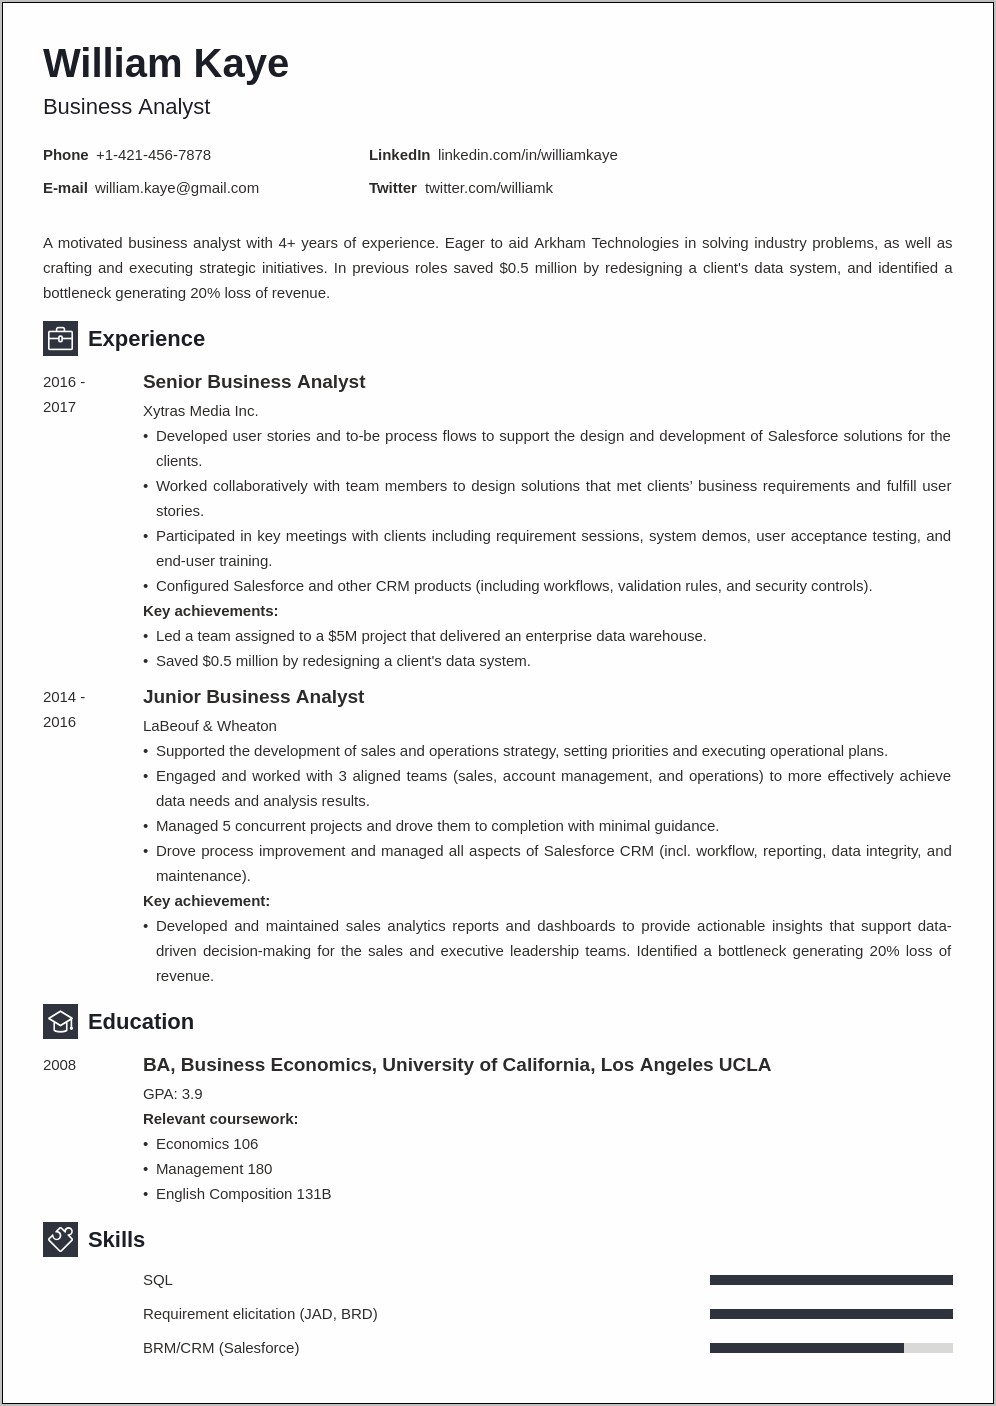 Mobile Project Description Sample Resume Business Analyst